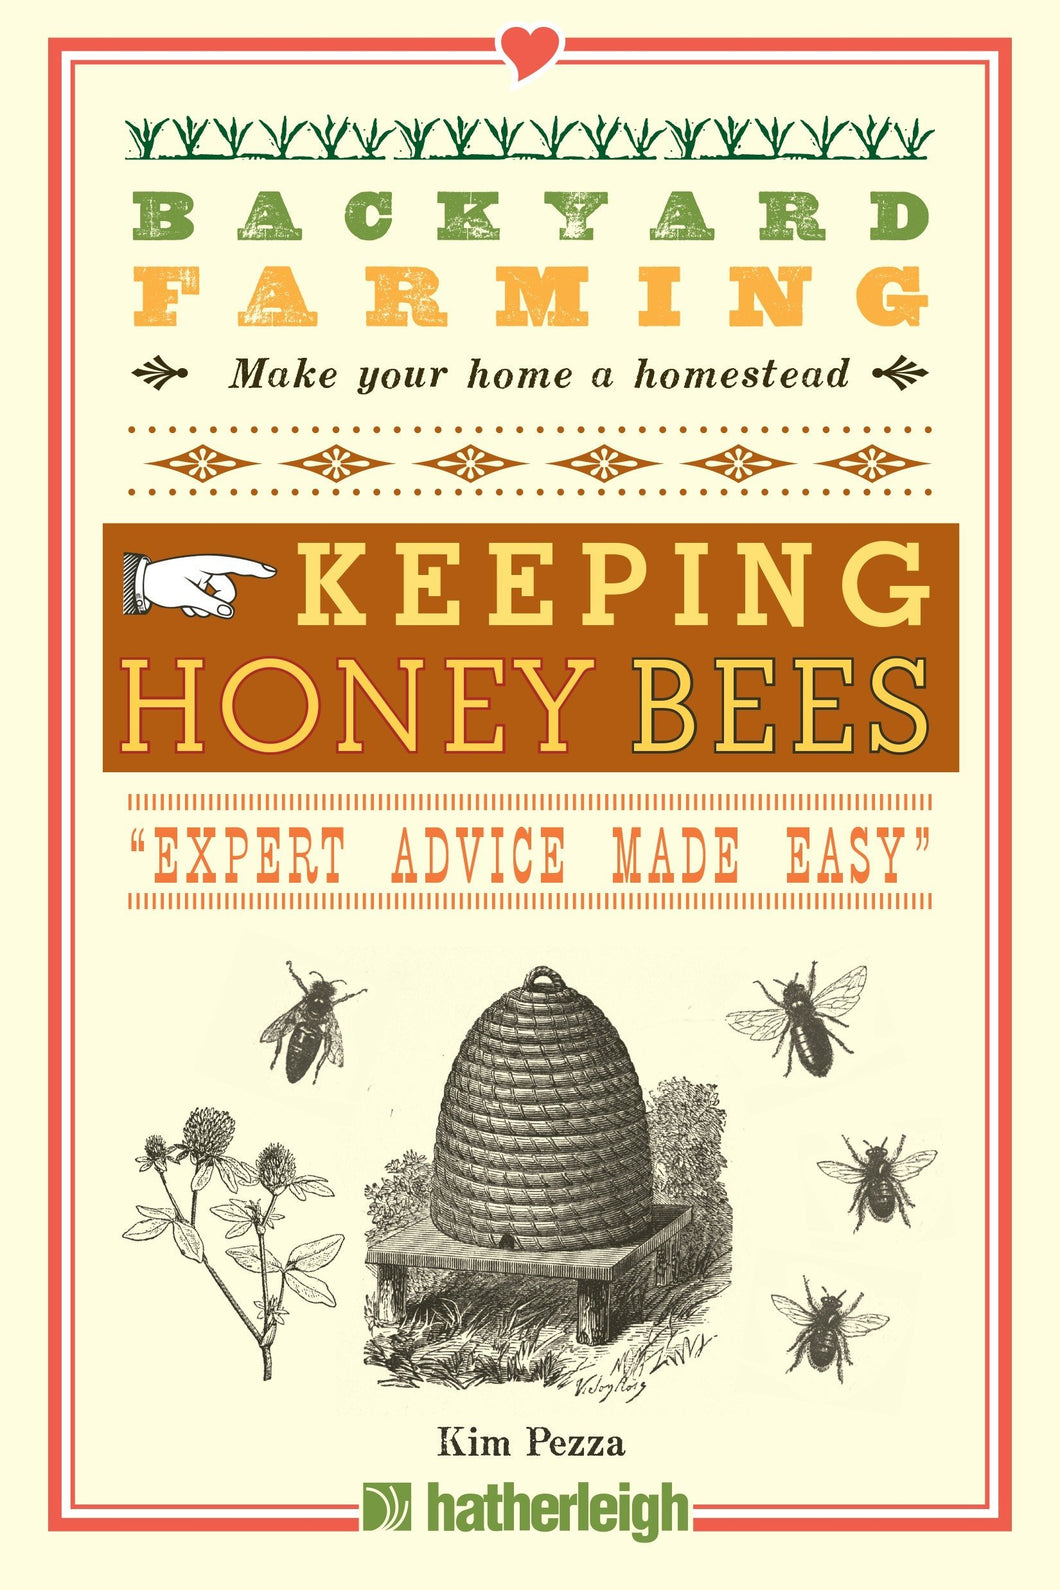 Backyard Farming Keeping Honey Bees